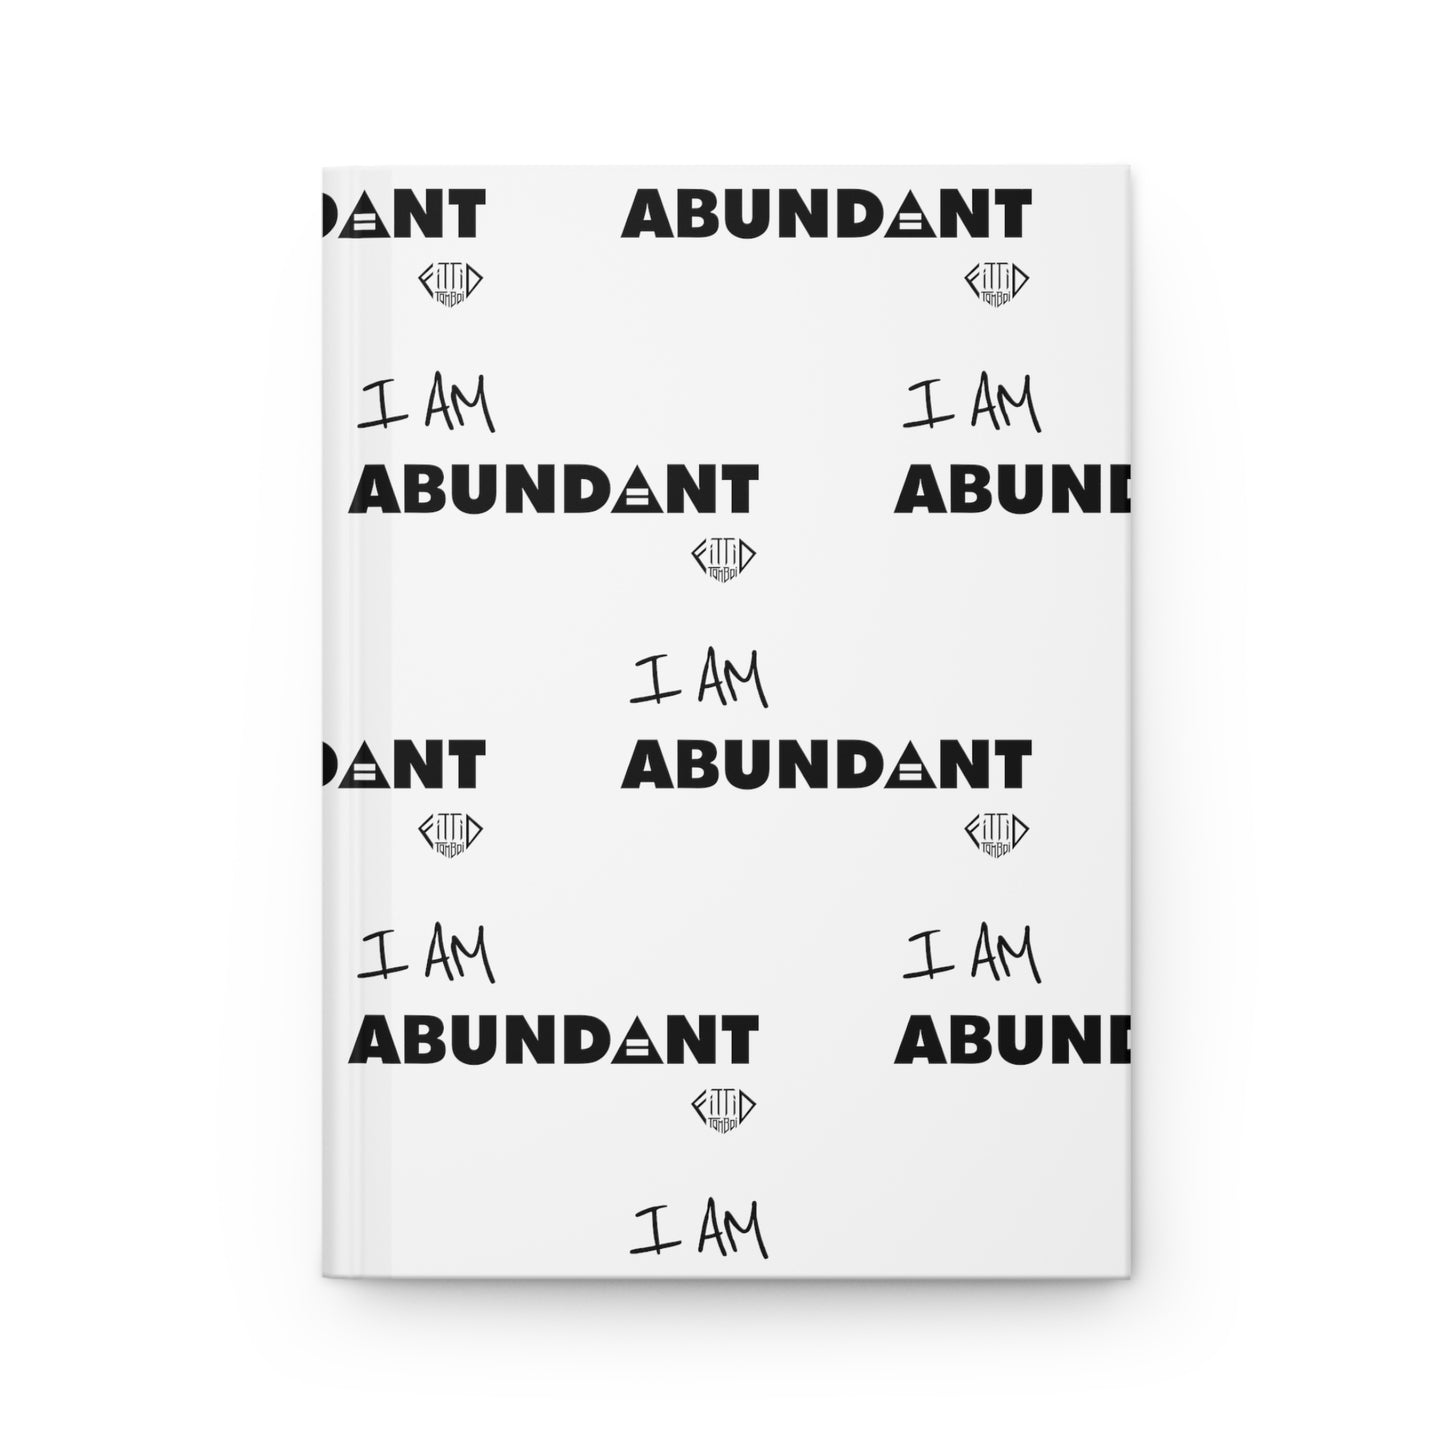 I AM ABUNDANT Journal Hardcover - White